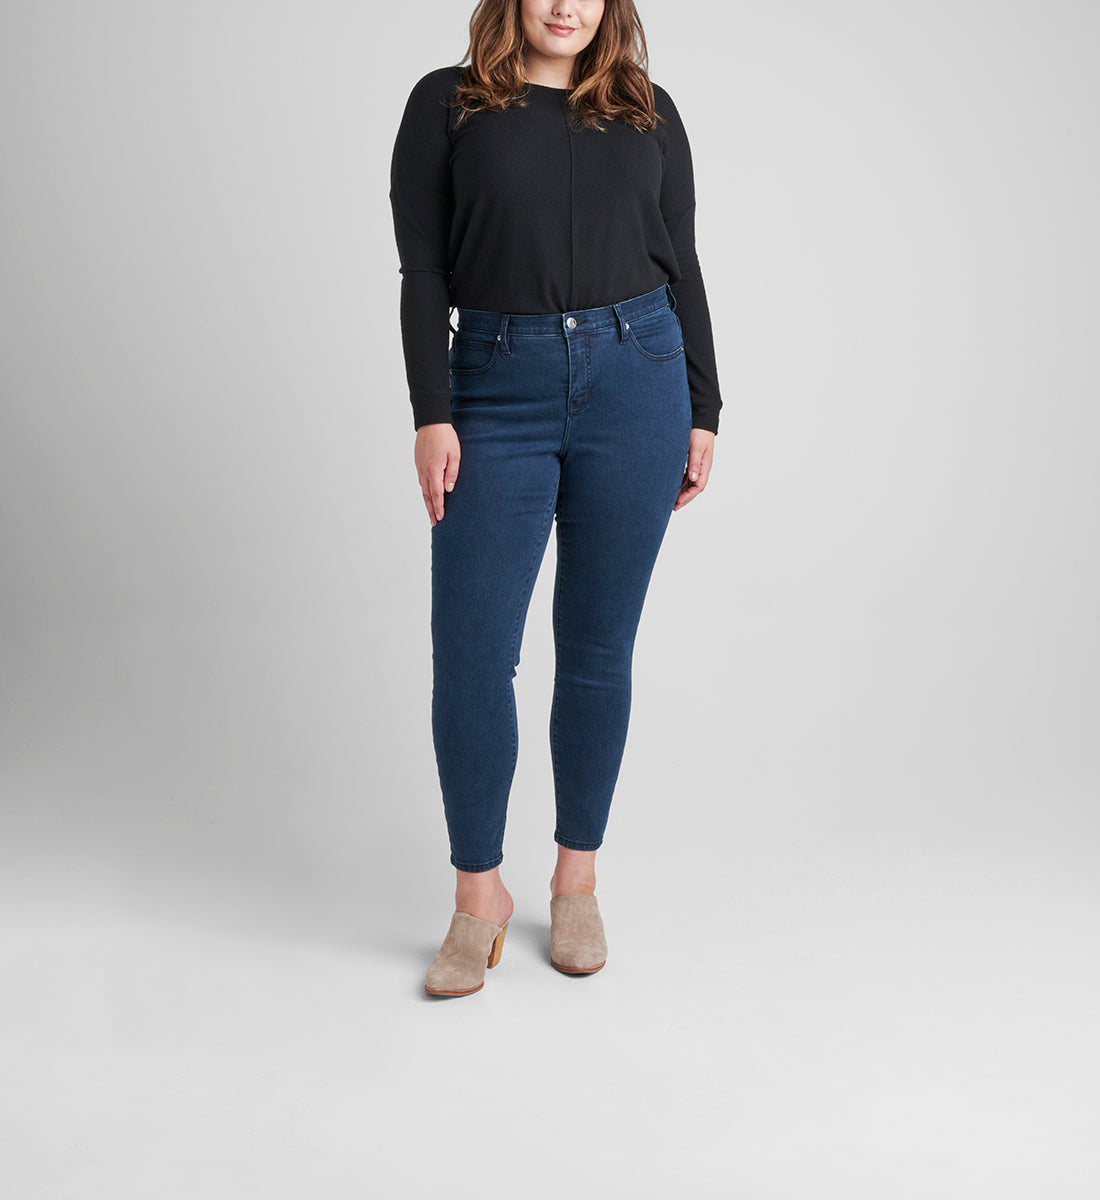 Castlerock Cecilia Skinny Jeans - Ashley Irene Boutique